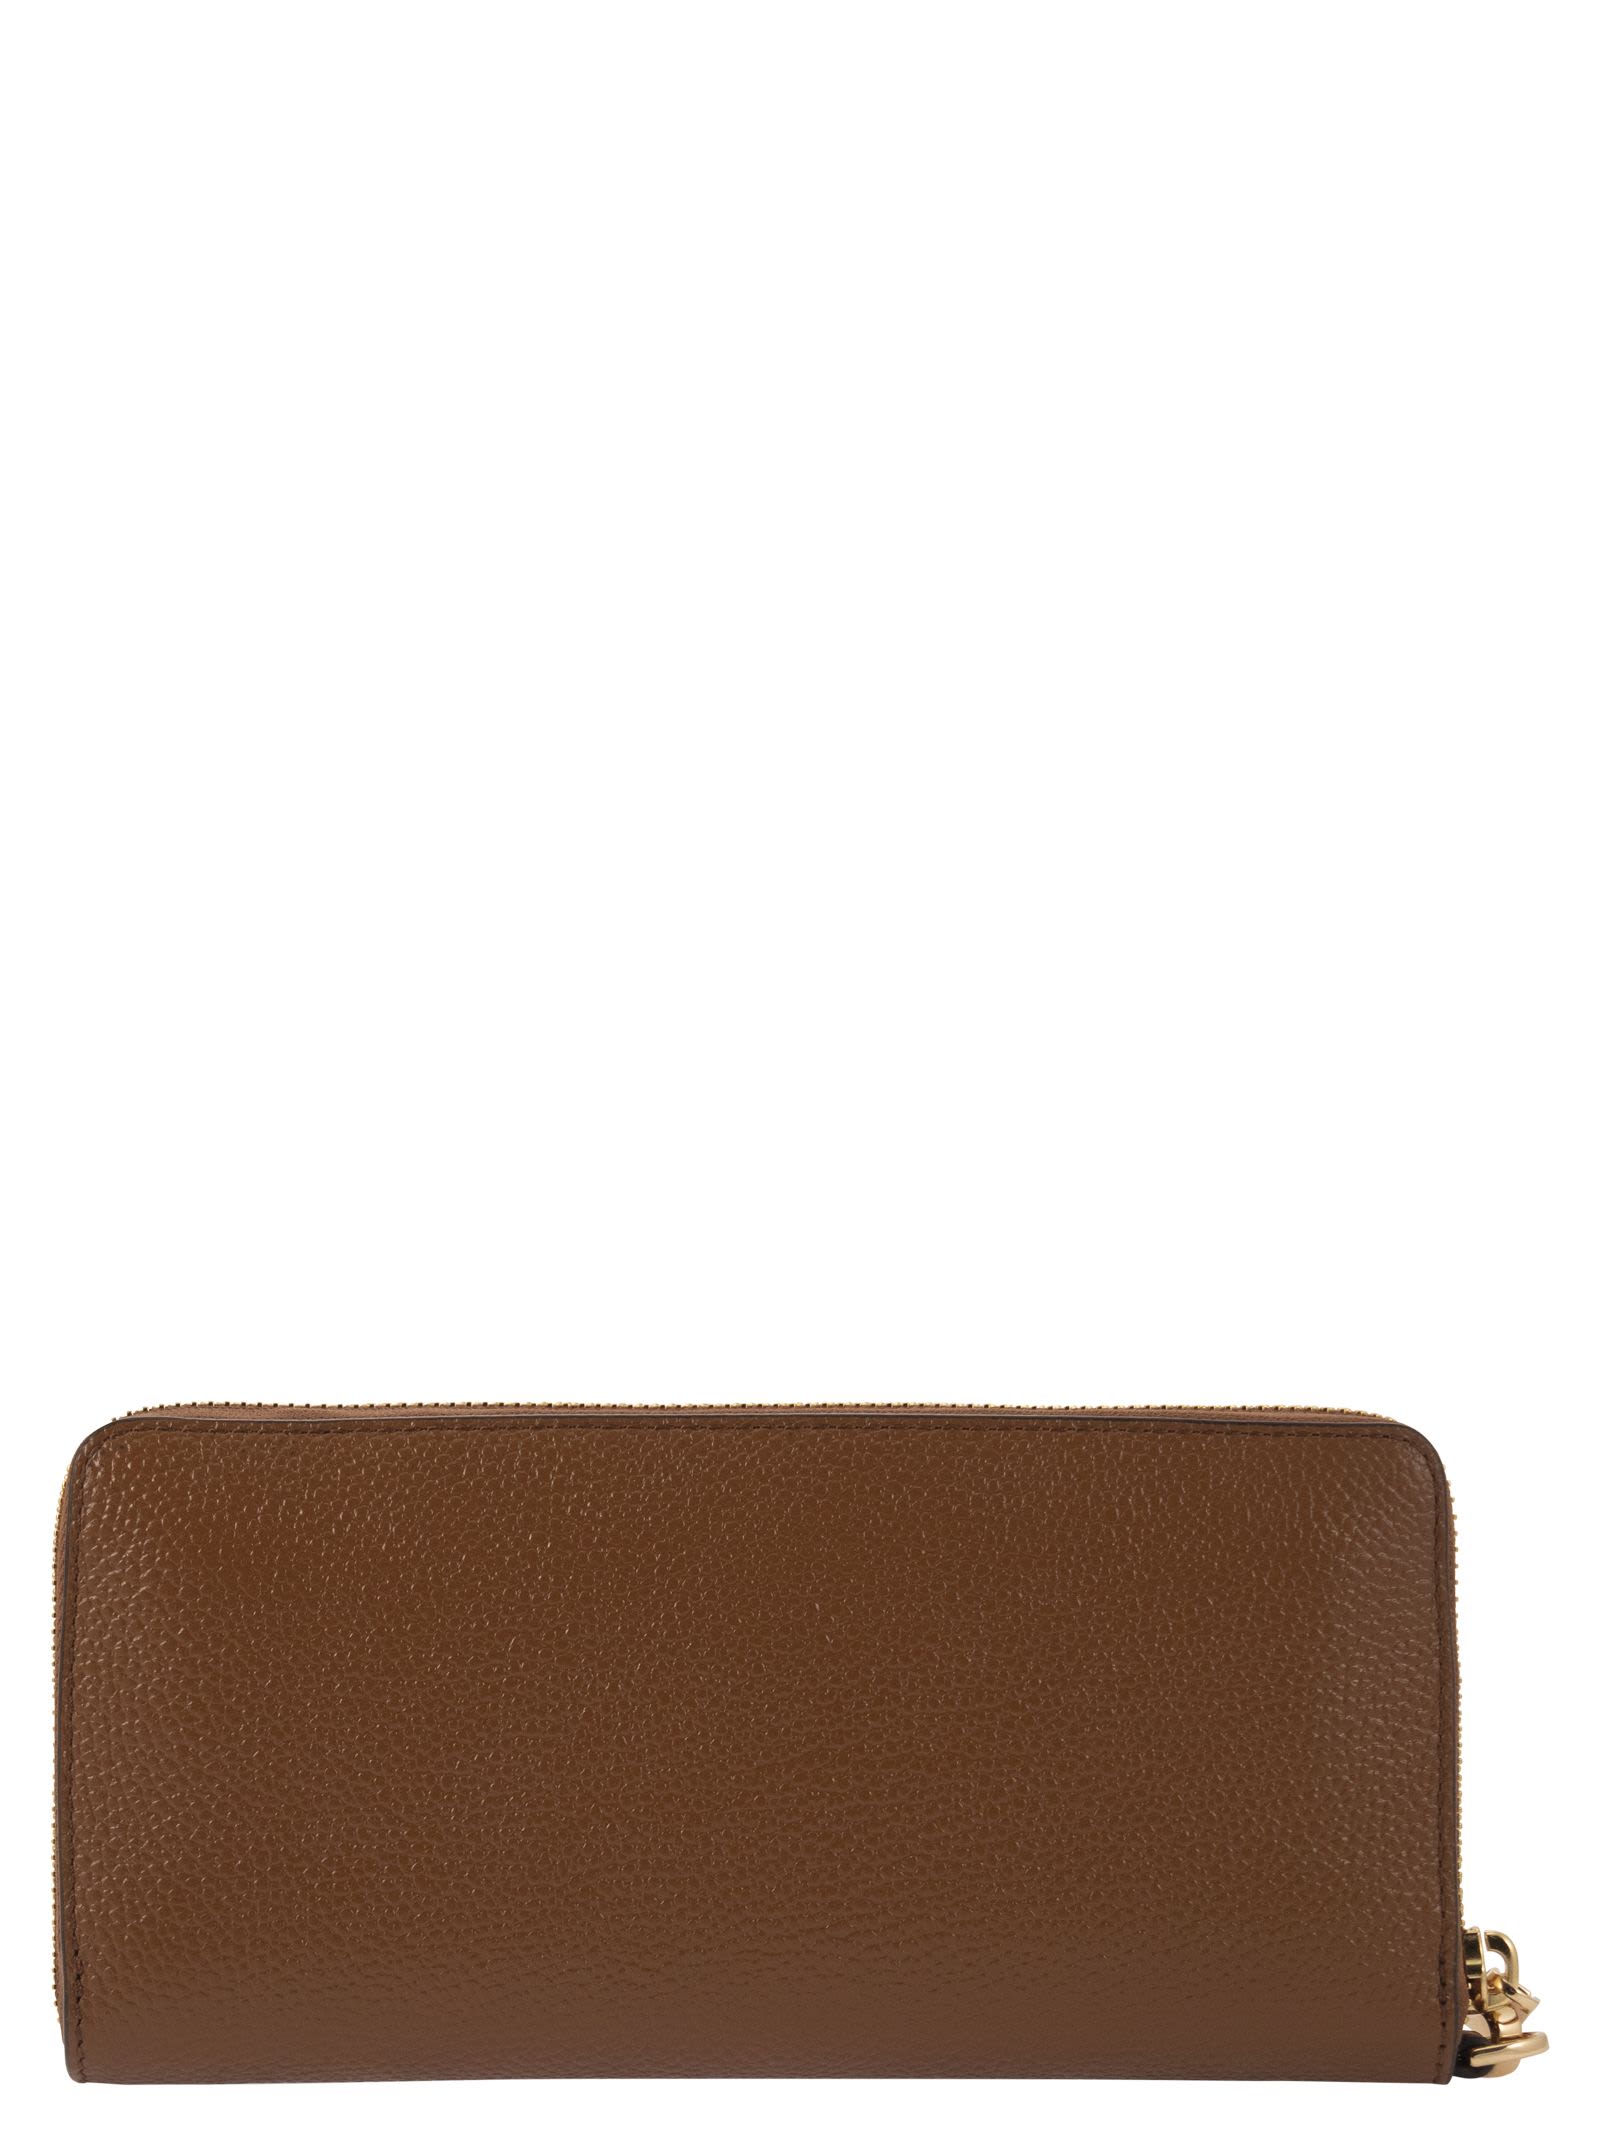 Shop Michael Kors Jet Set - Grained Leather Wallet In Brown